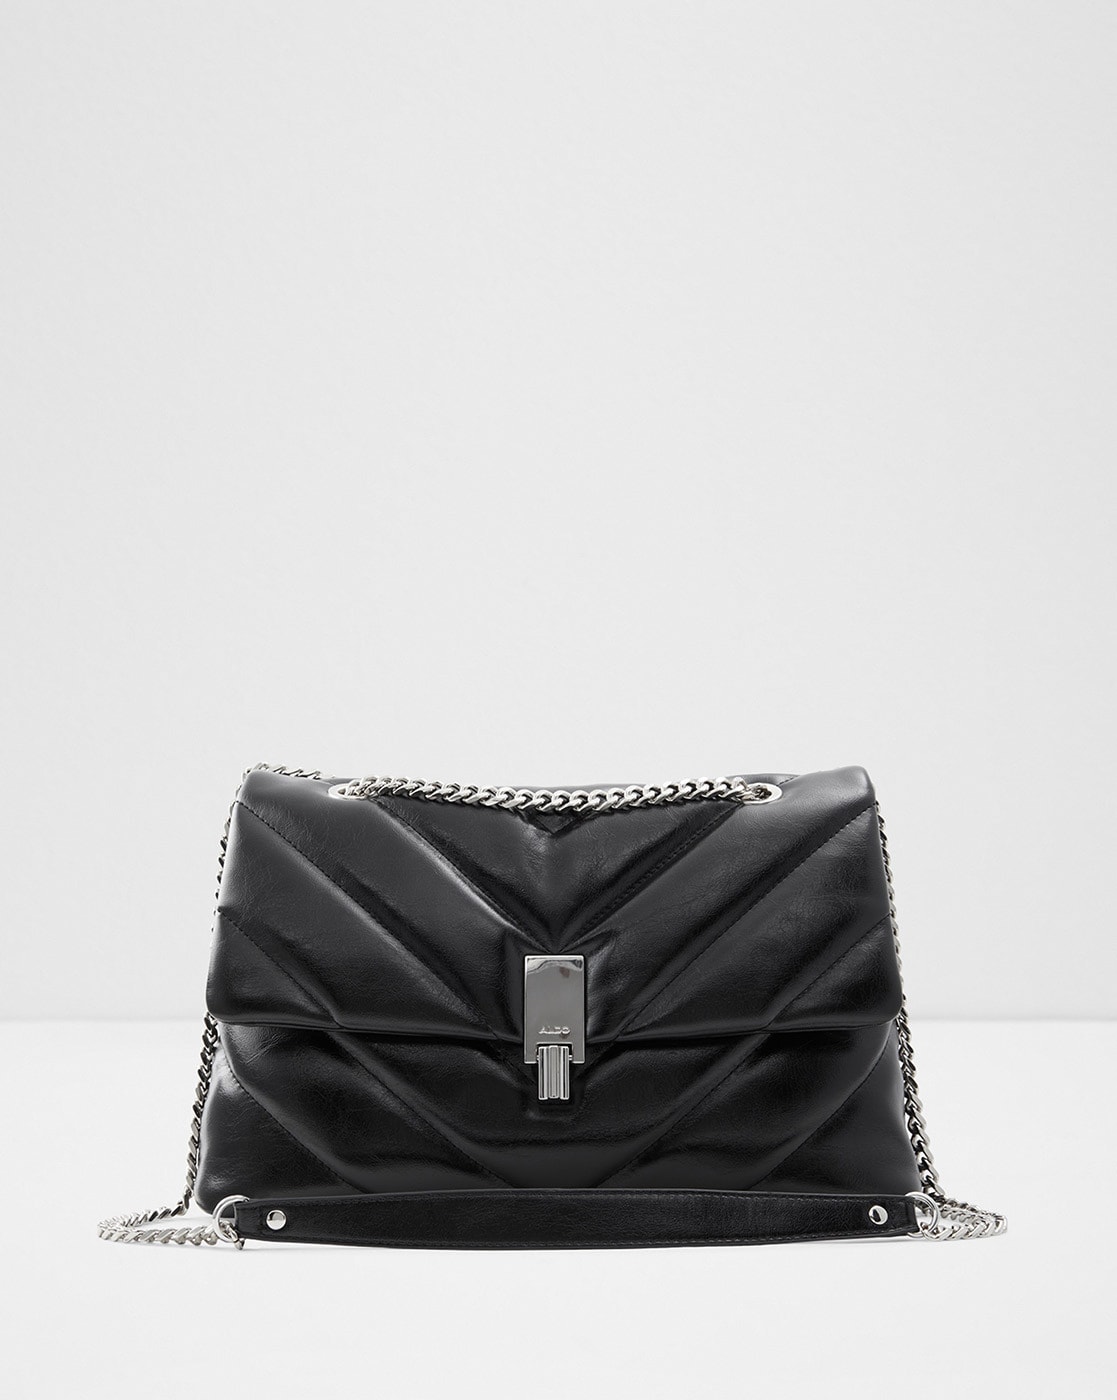 ALDO Black PU Structured Sling Bag (Onesize) by Myntra